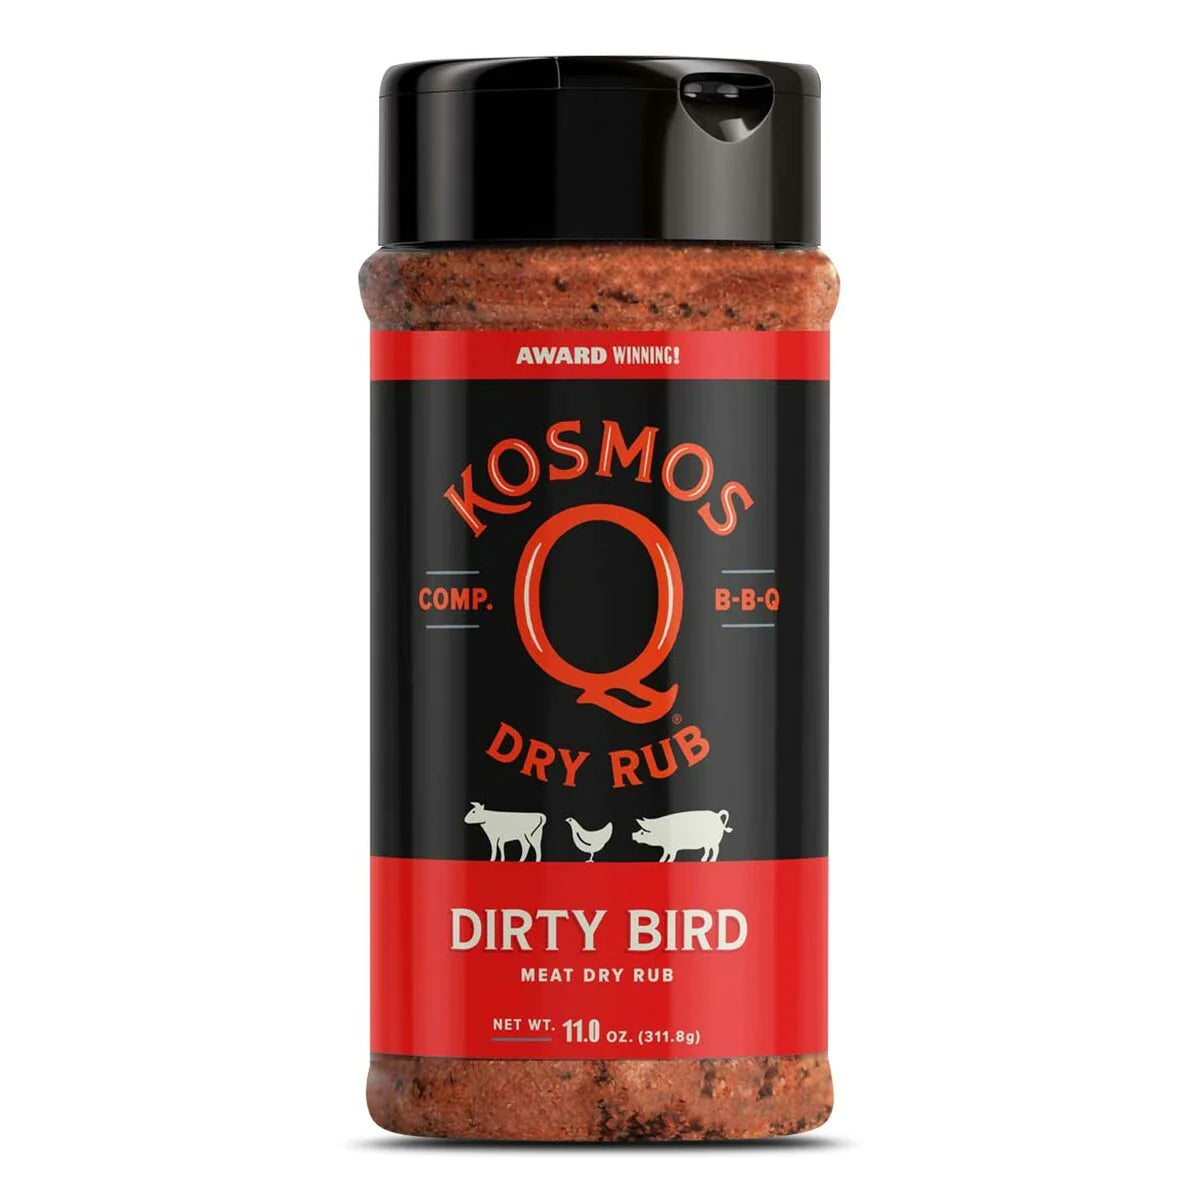 Kosmos Dirty Bird